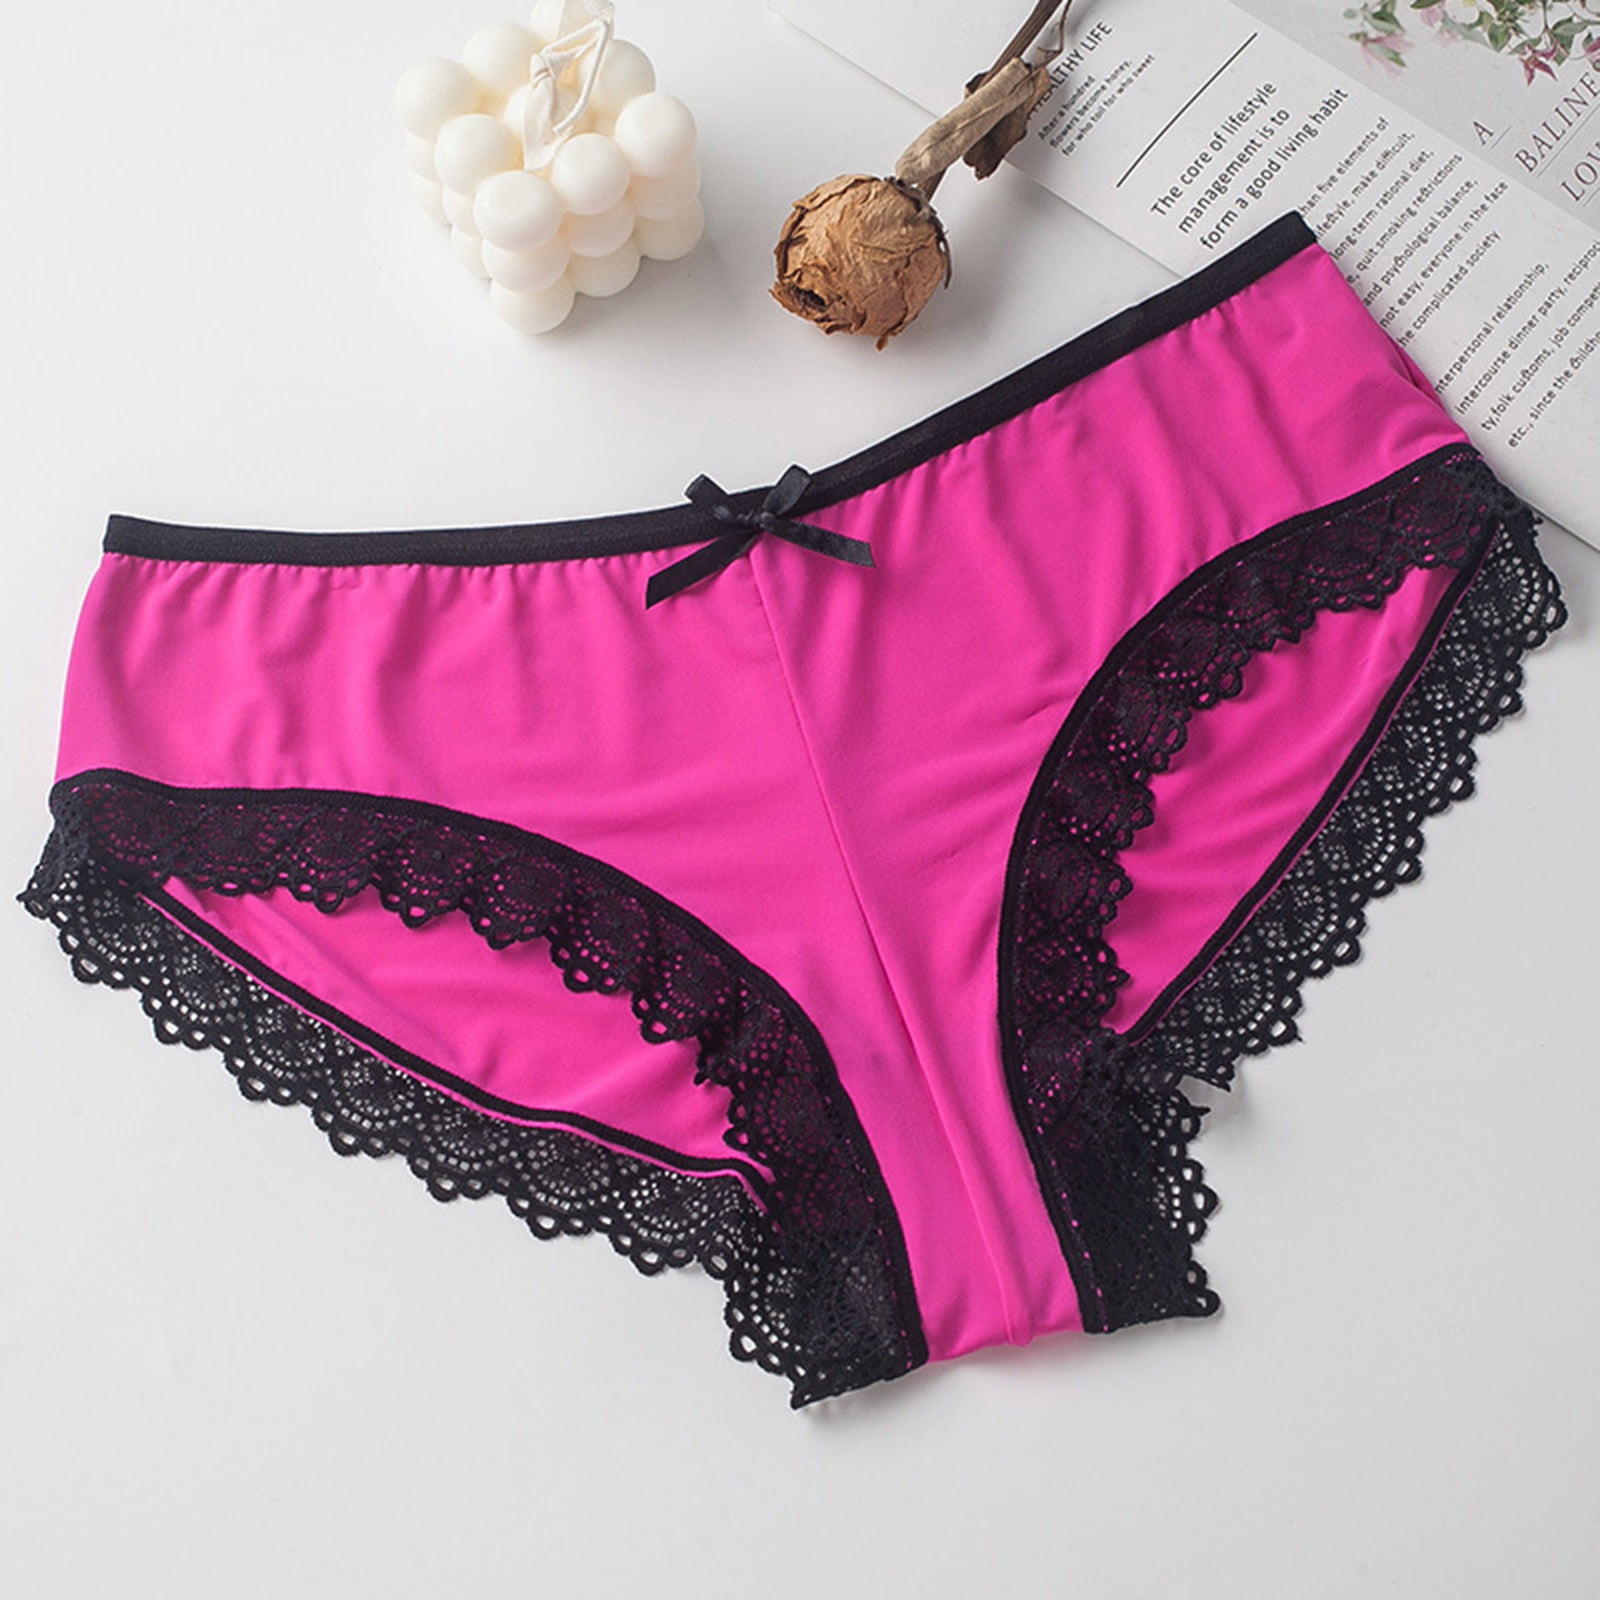 Gubotare Boxer Briefs Women Panties Pink Lace Transparent Out Underwear Comfort Seamless Waist Briefs Lingerie Lenceria,B L - Walmart.com